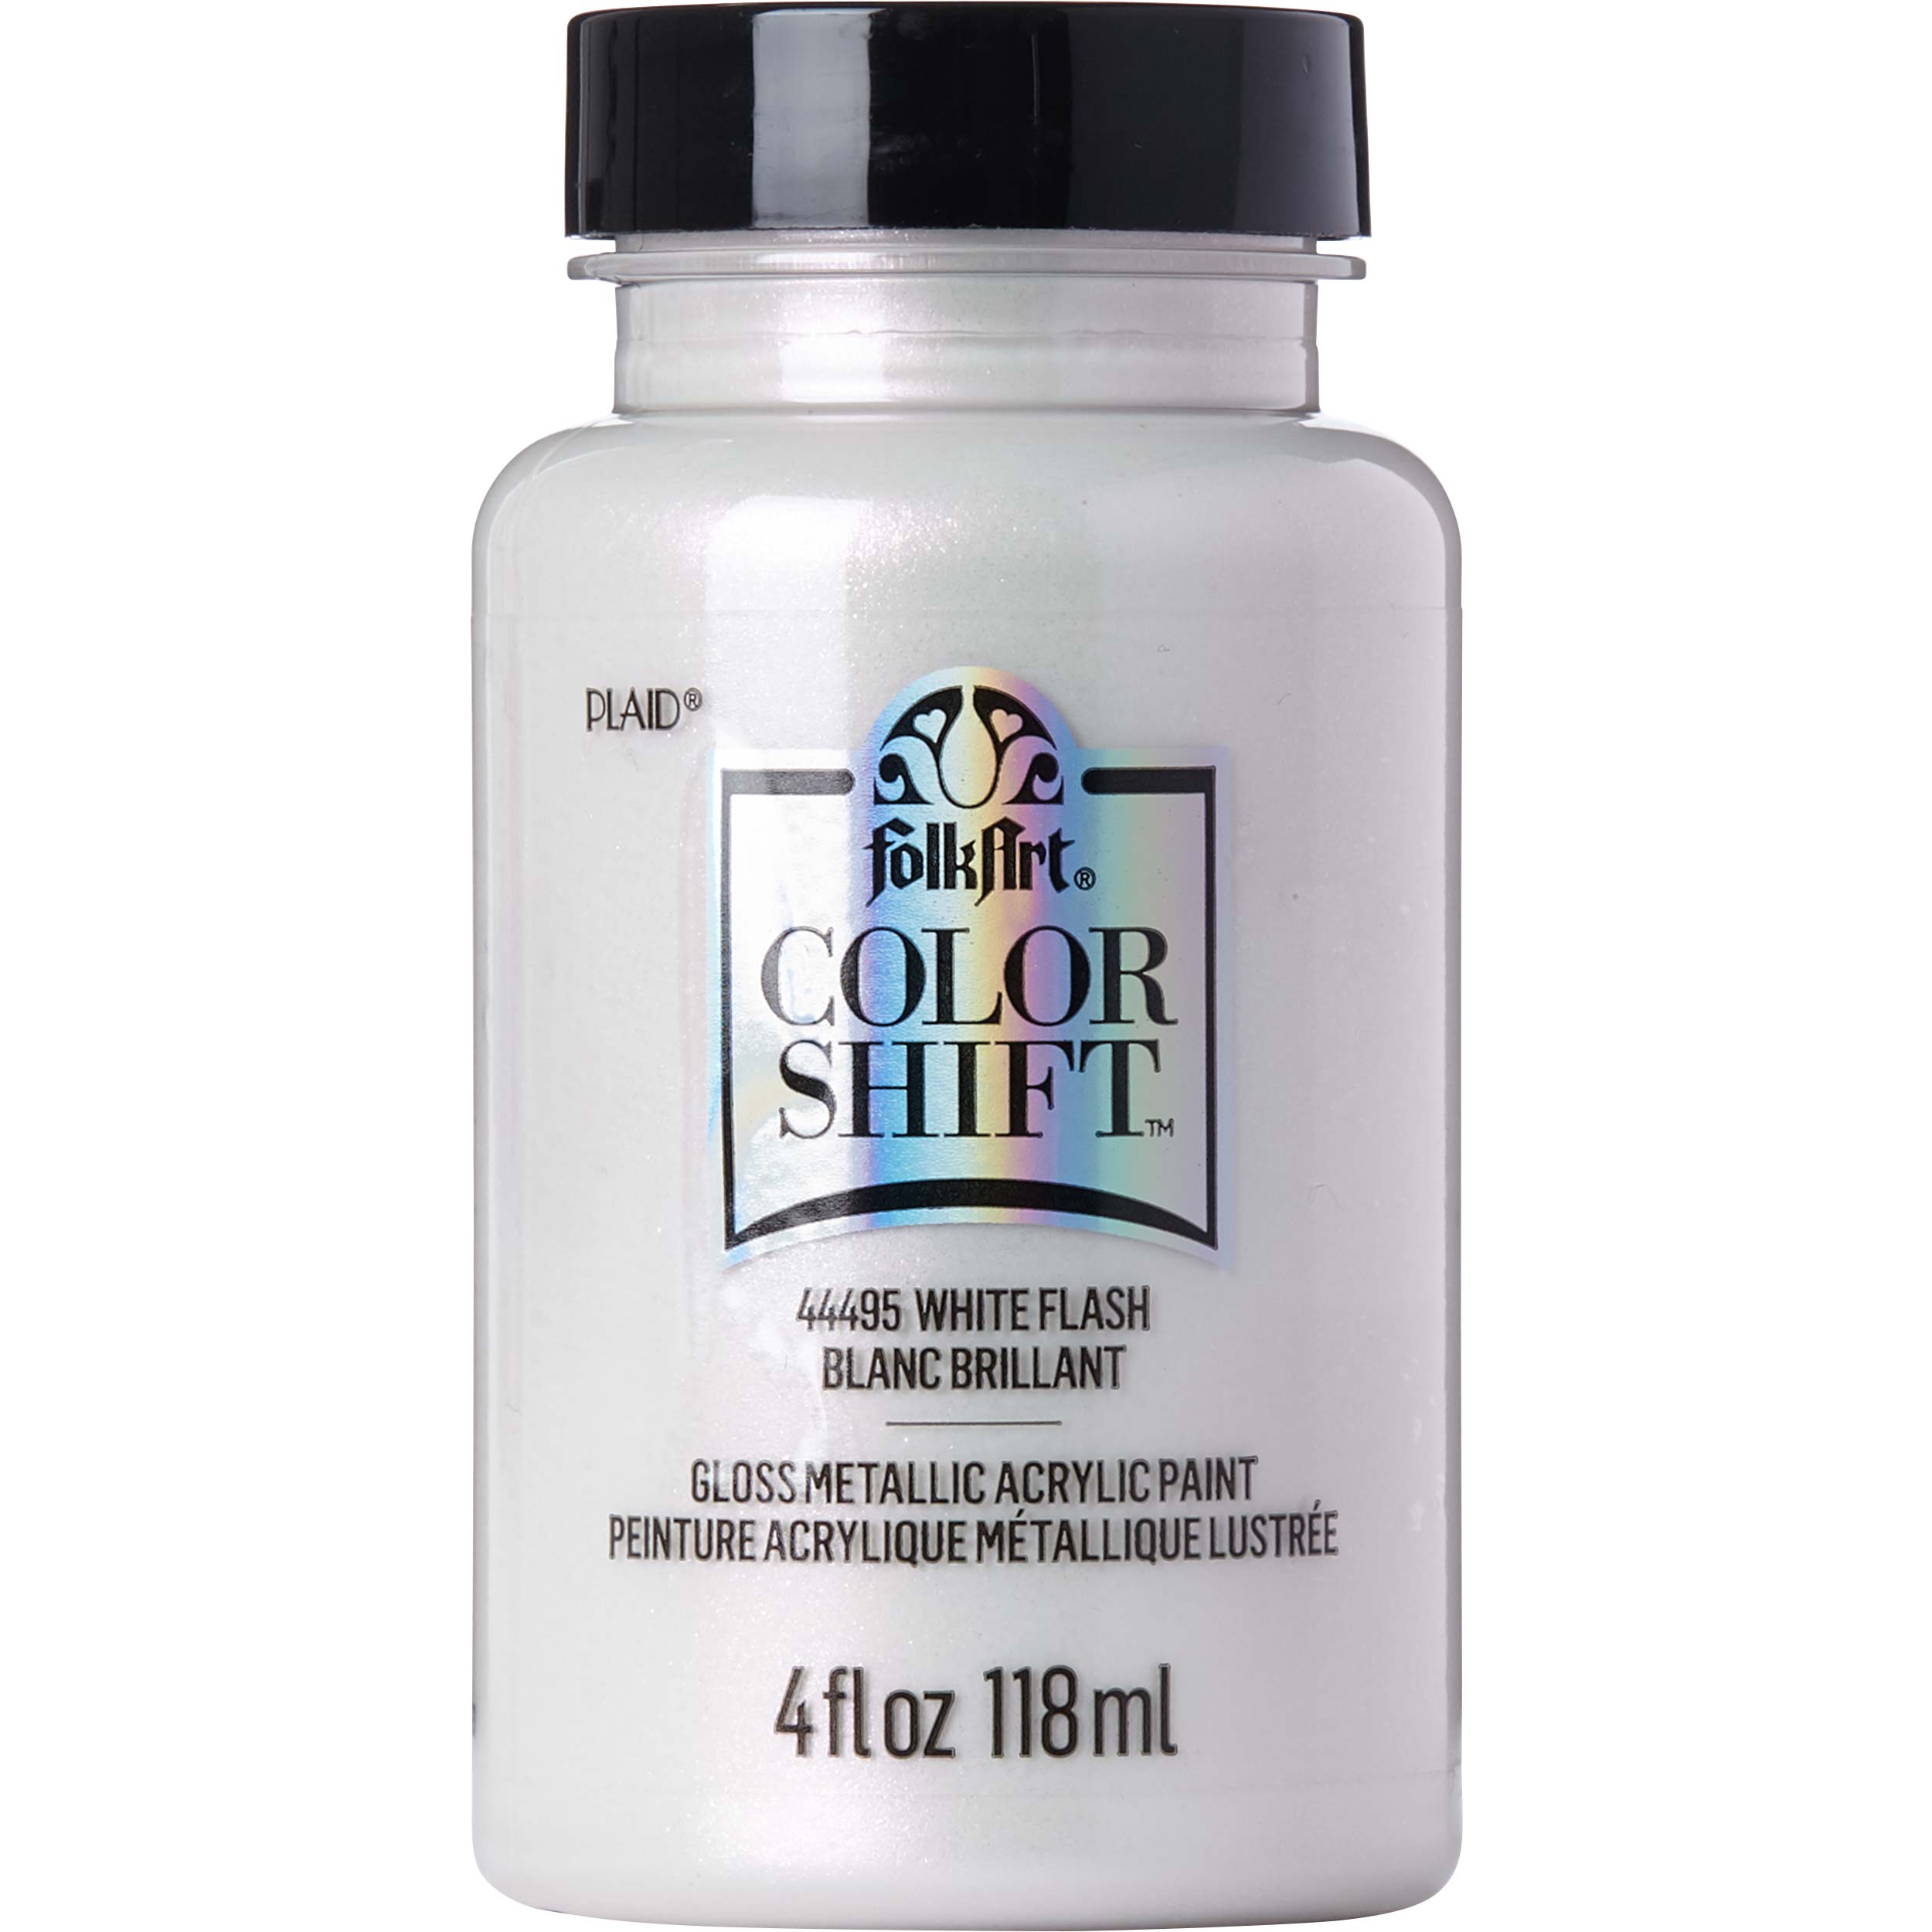 FolkArt ® Color Shift™ Acrylic Paint - White Flash, 4 oz. - 44495